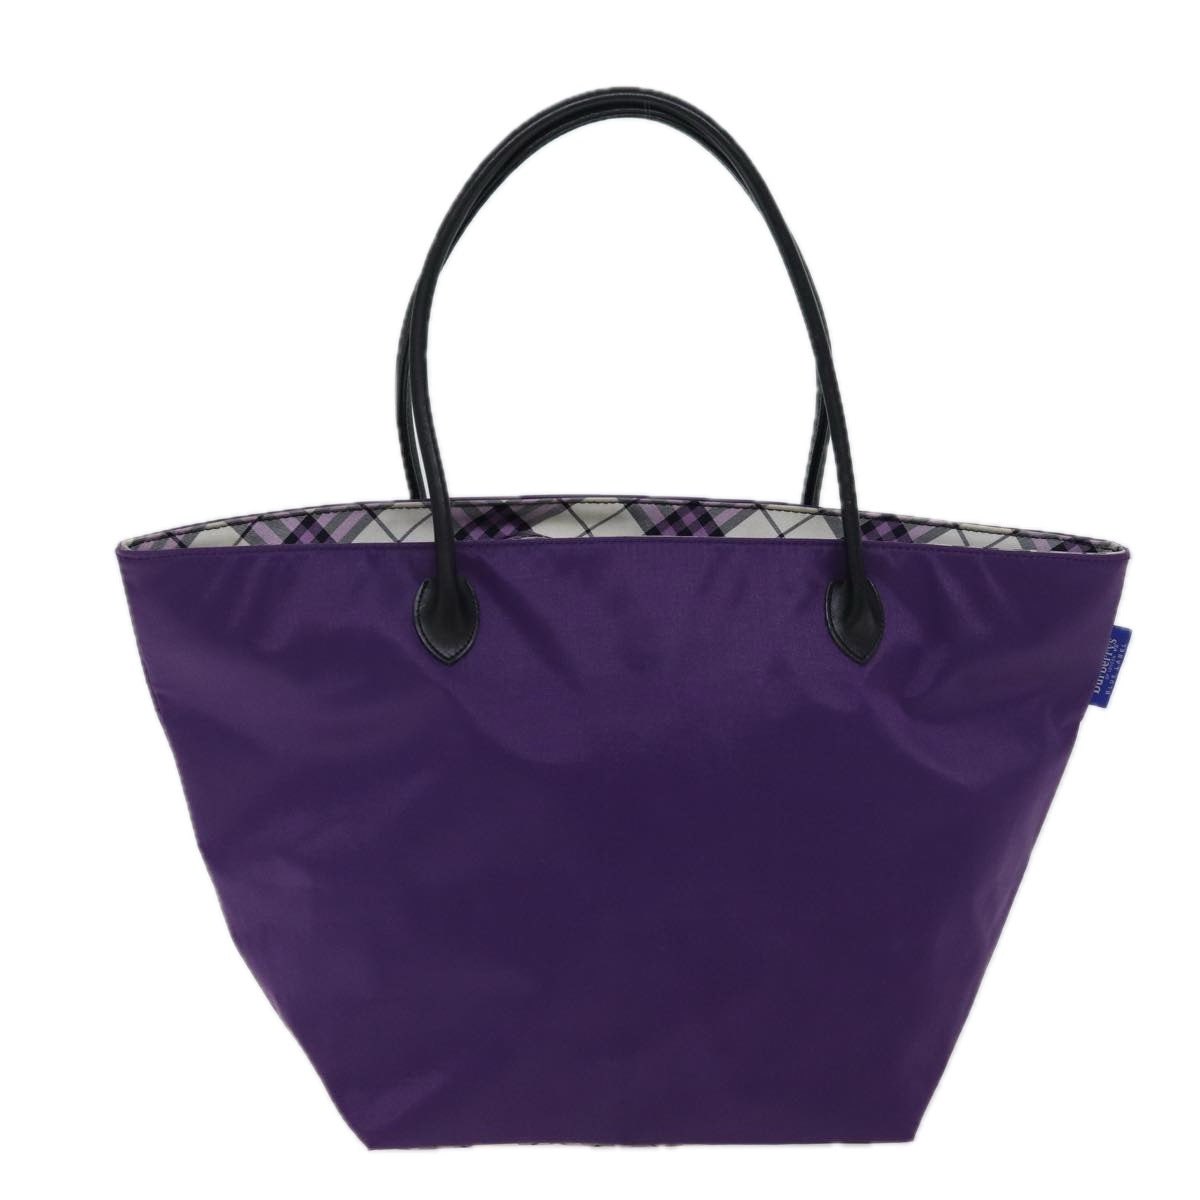 Burberrys Nova Check Blue Label Tote Bag Nylon Purple Auth bs13575 - 0